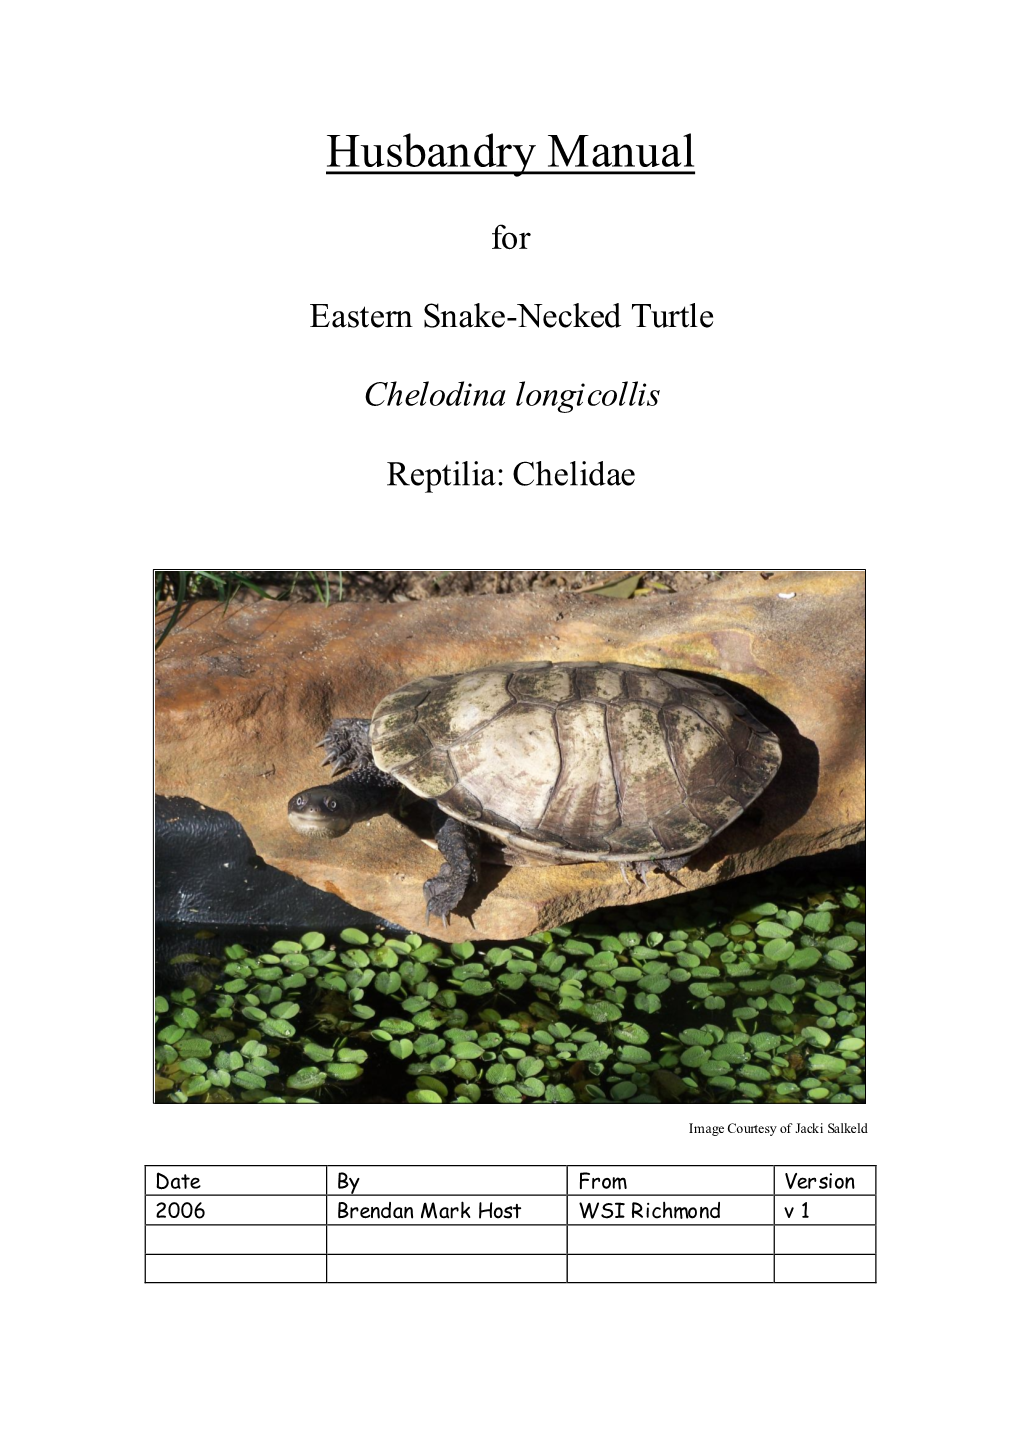 Eastern Longnecked Turtle Chelodinia Longicollis